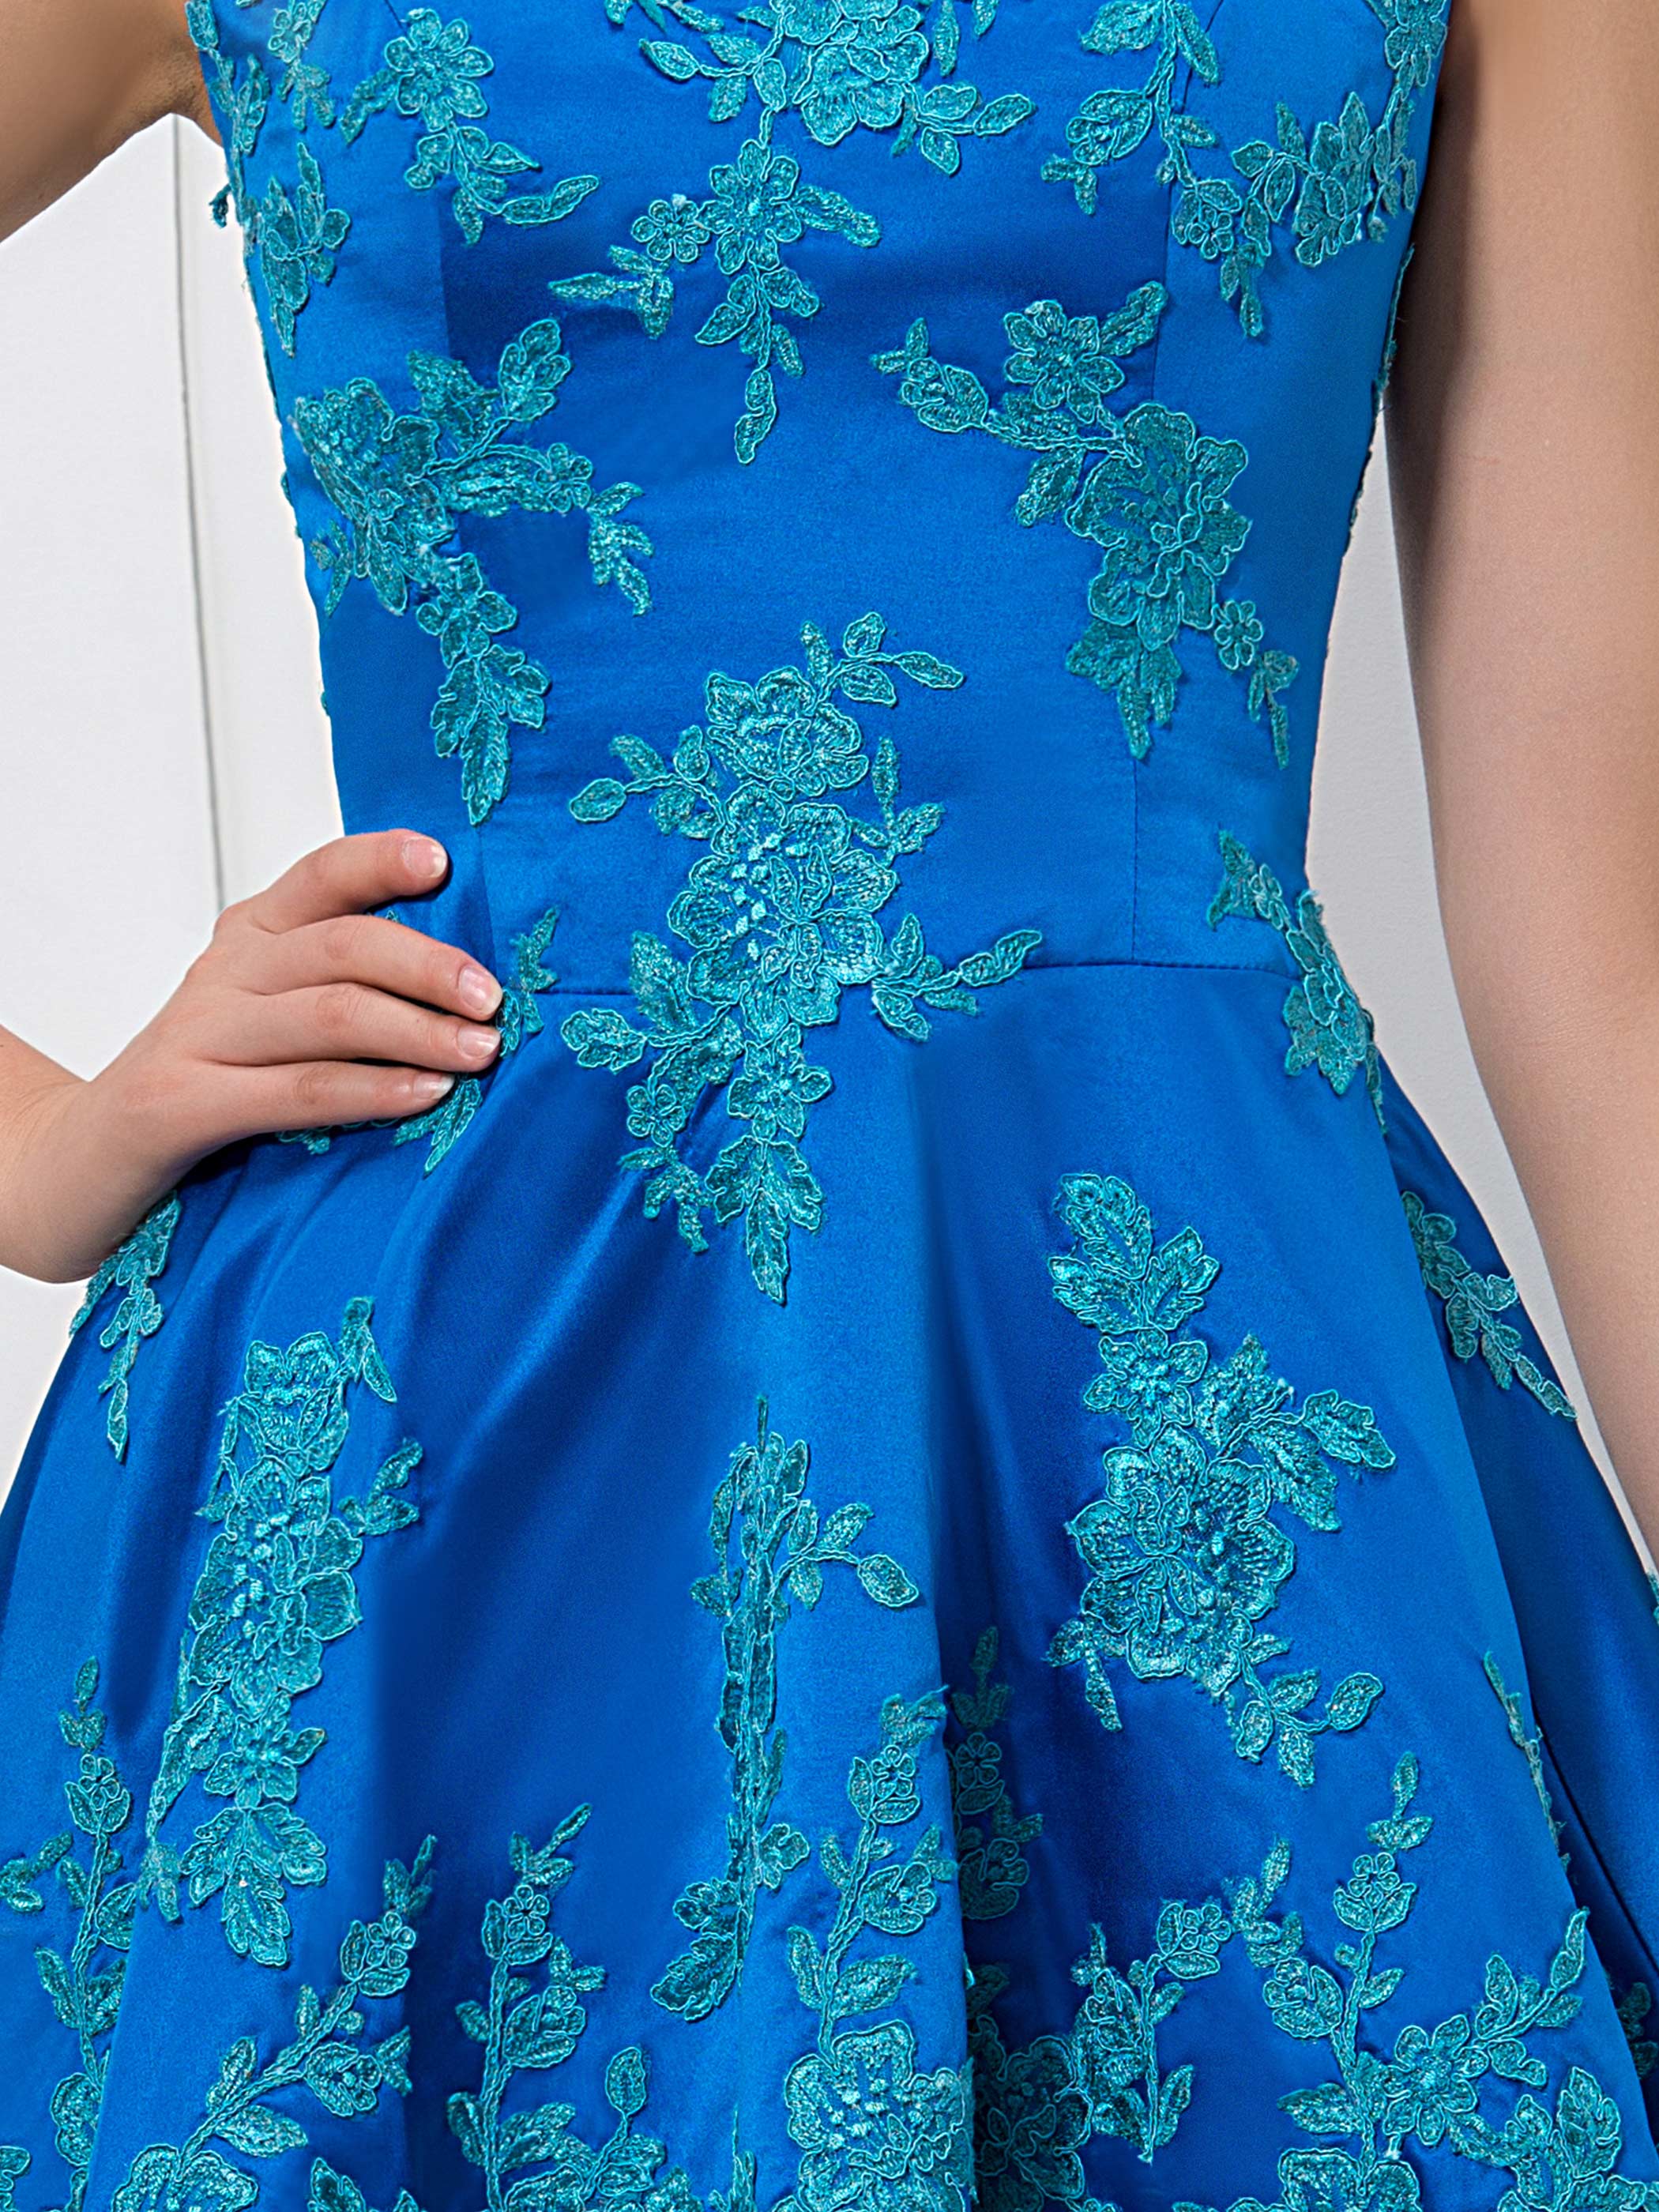 Jewel Neck A-Line Appliques Mini Homecoming Dress